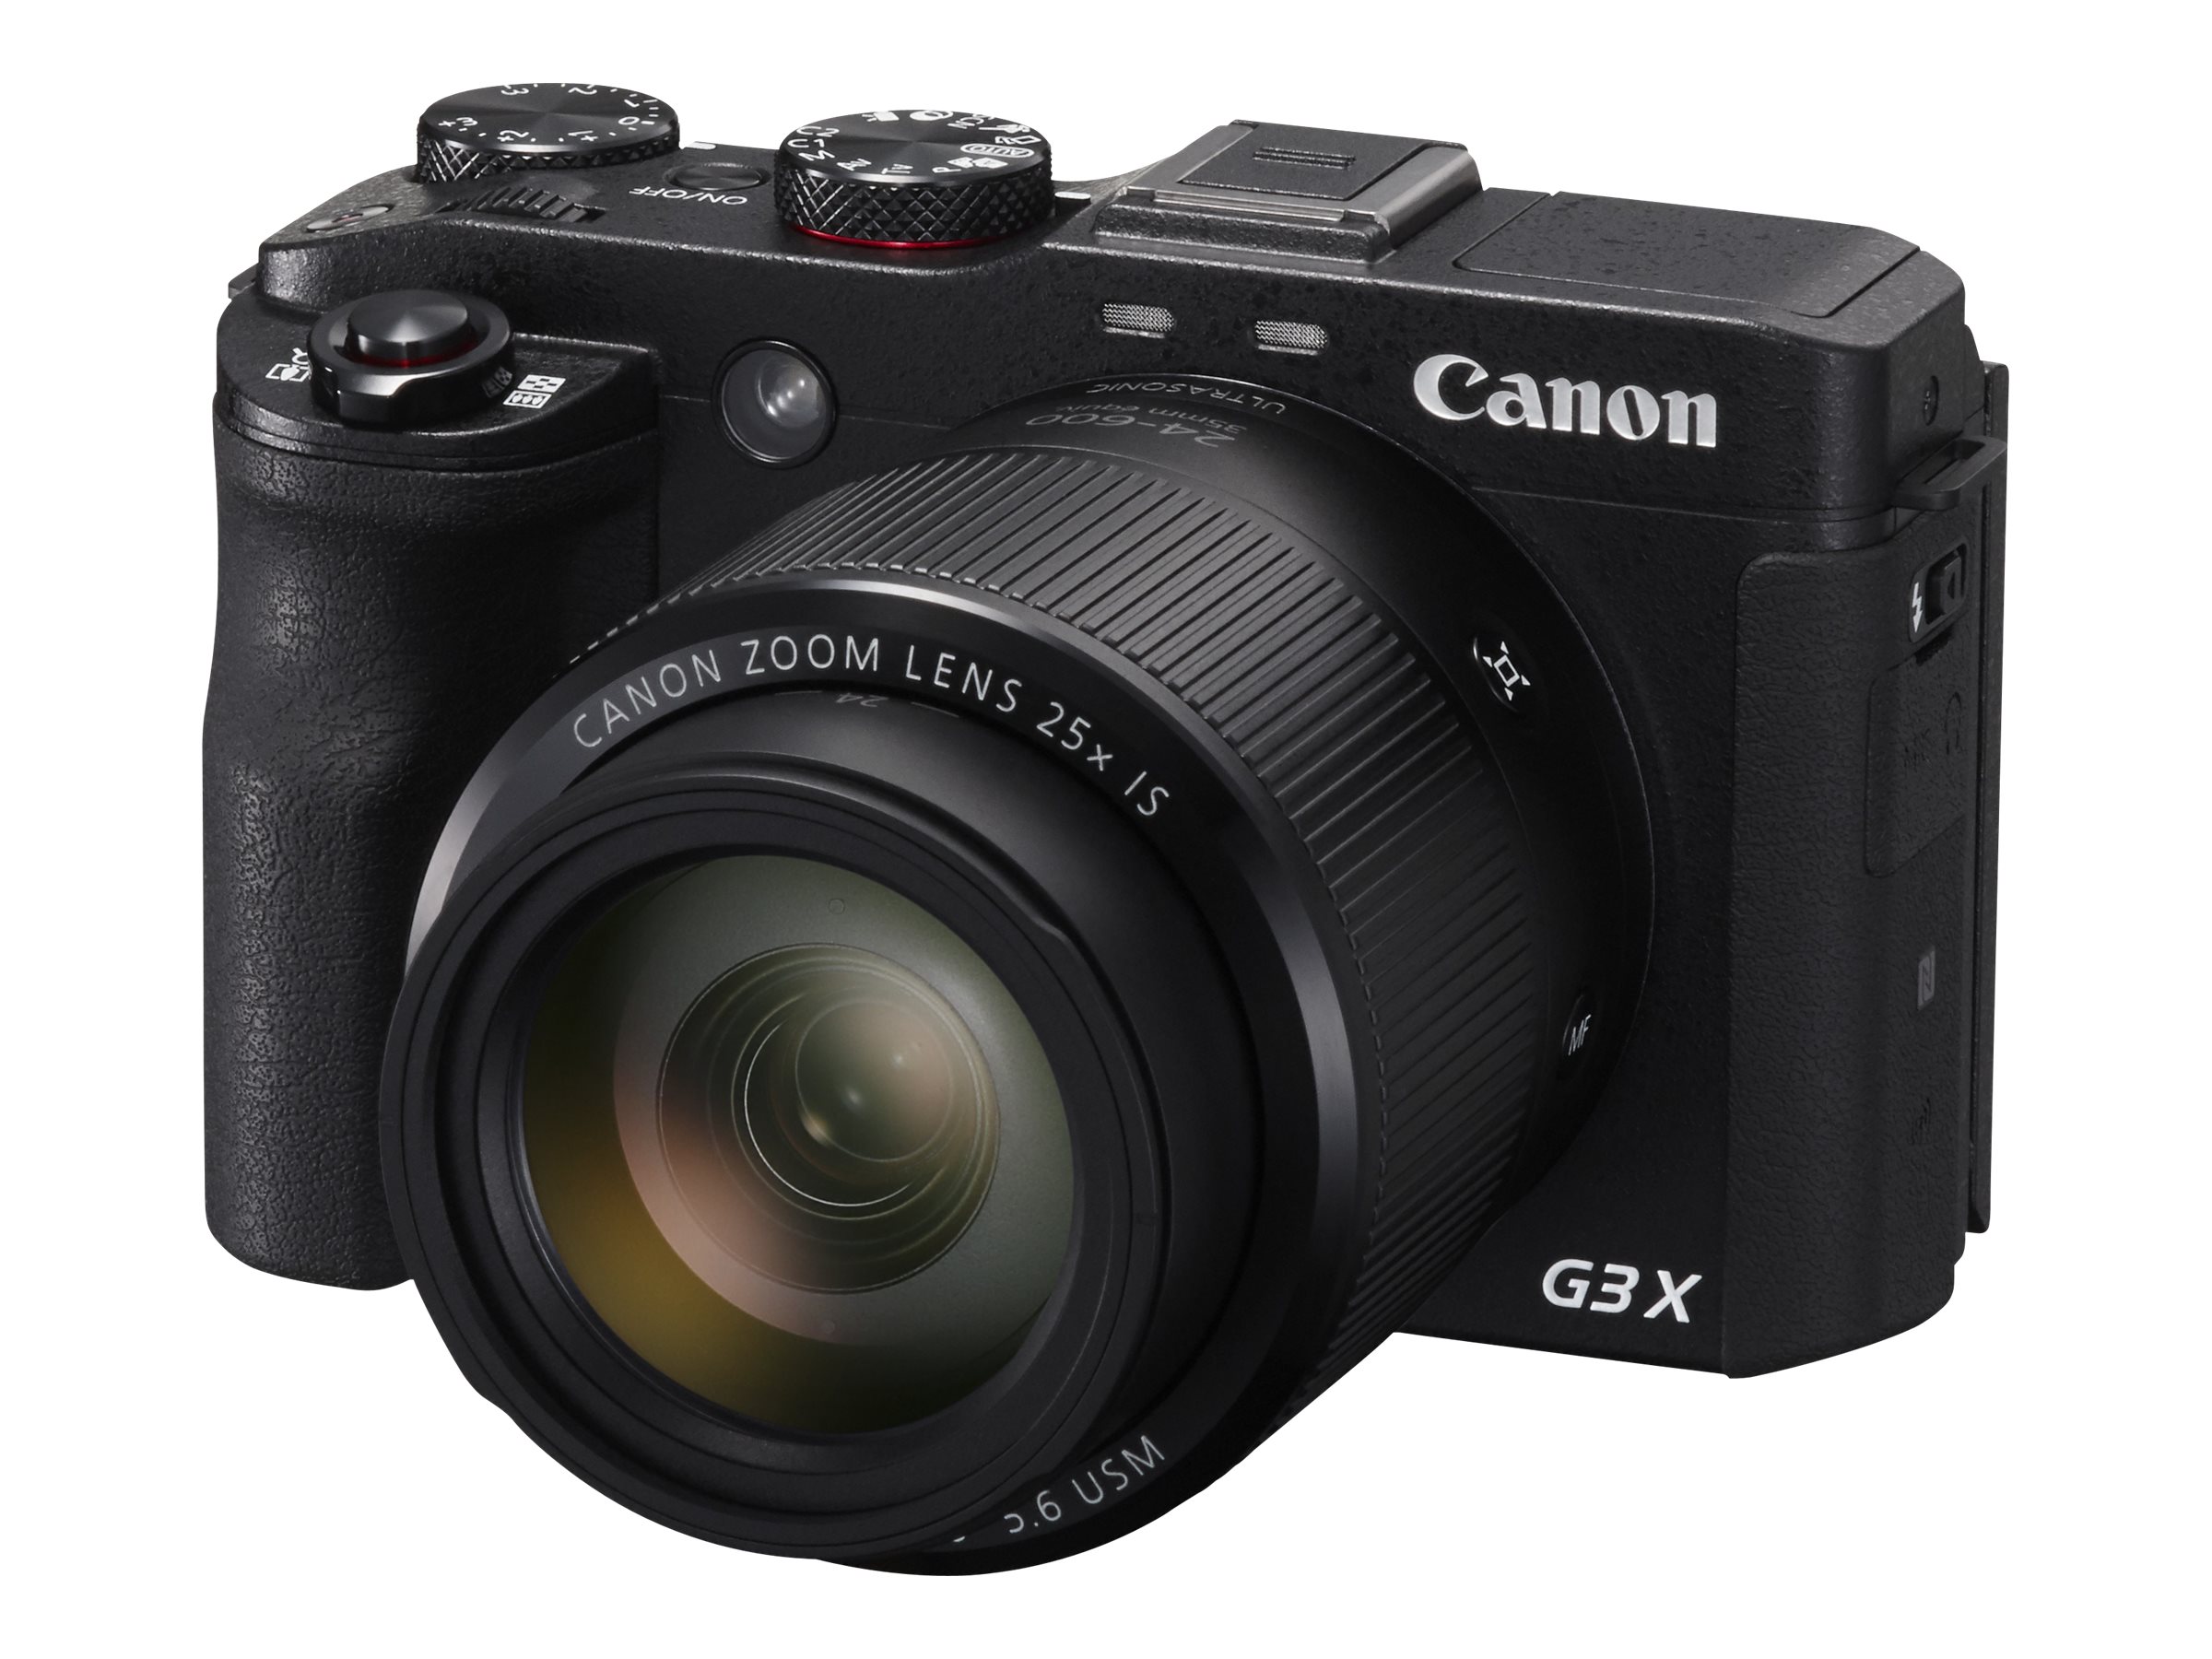 Canon PowerShot G3 X - Digital camera - compact - 20.2 MP - 1080p - 25x optical zoom - Wi-Fi, NFC - image 5 of 15